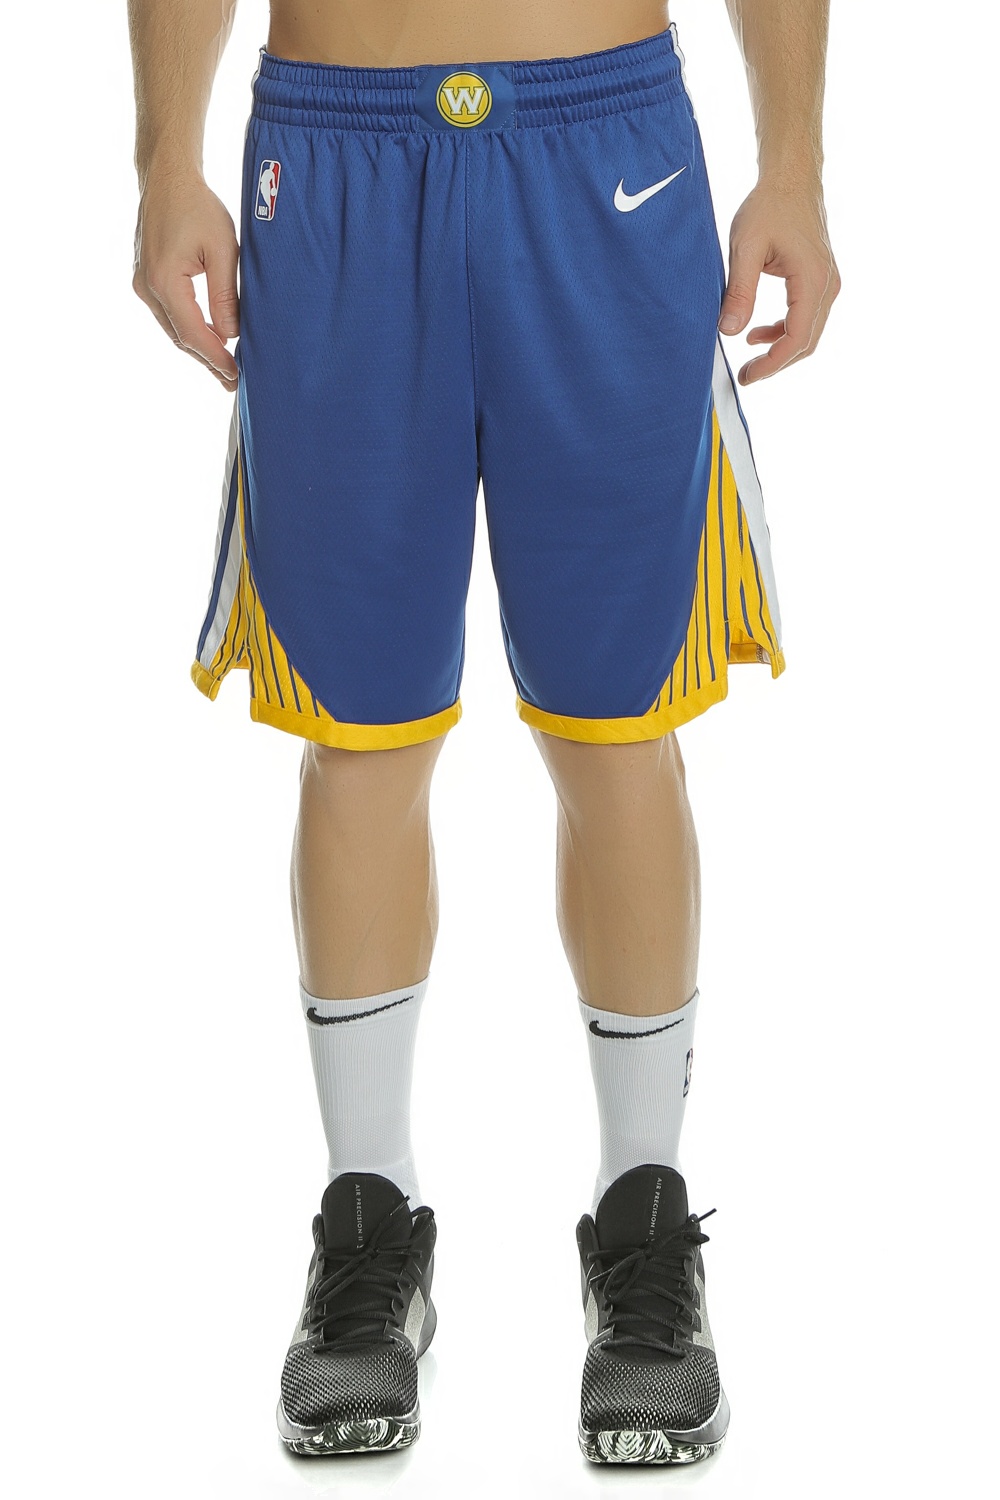 NIKE - Ανδρικό σορτς Nike NBA Golden State Warriors Swingman μπλε Ανδρικά/Ρούχα/Σορτς-Βερμούδες/Αθλητικά